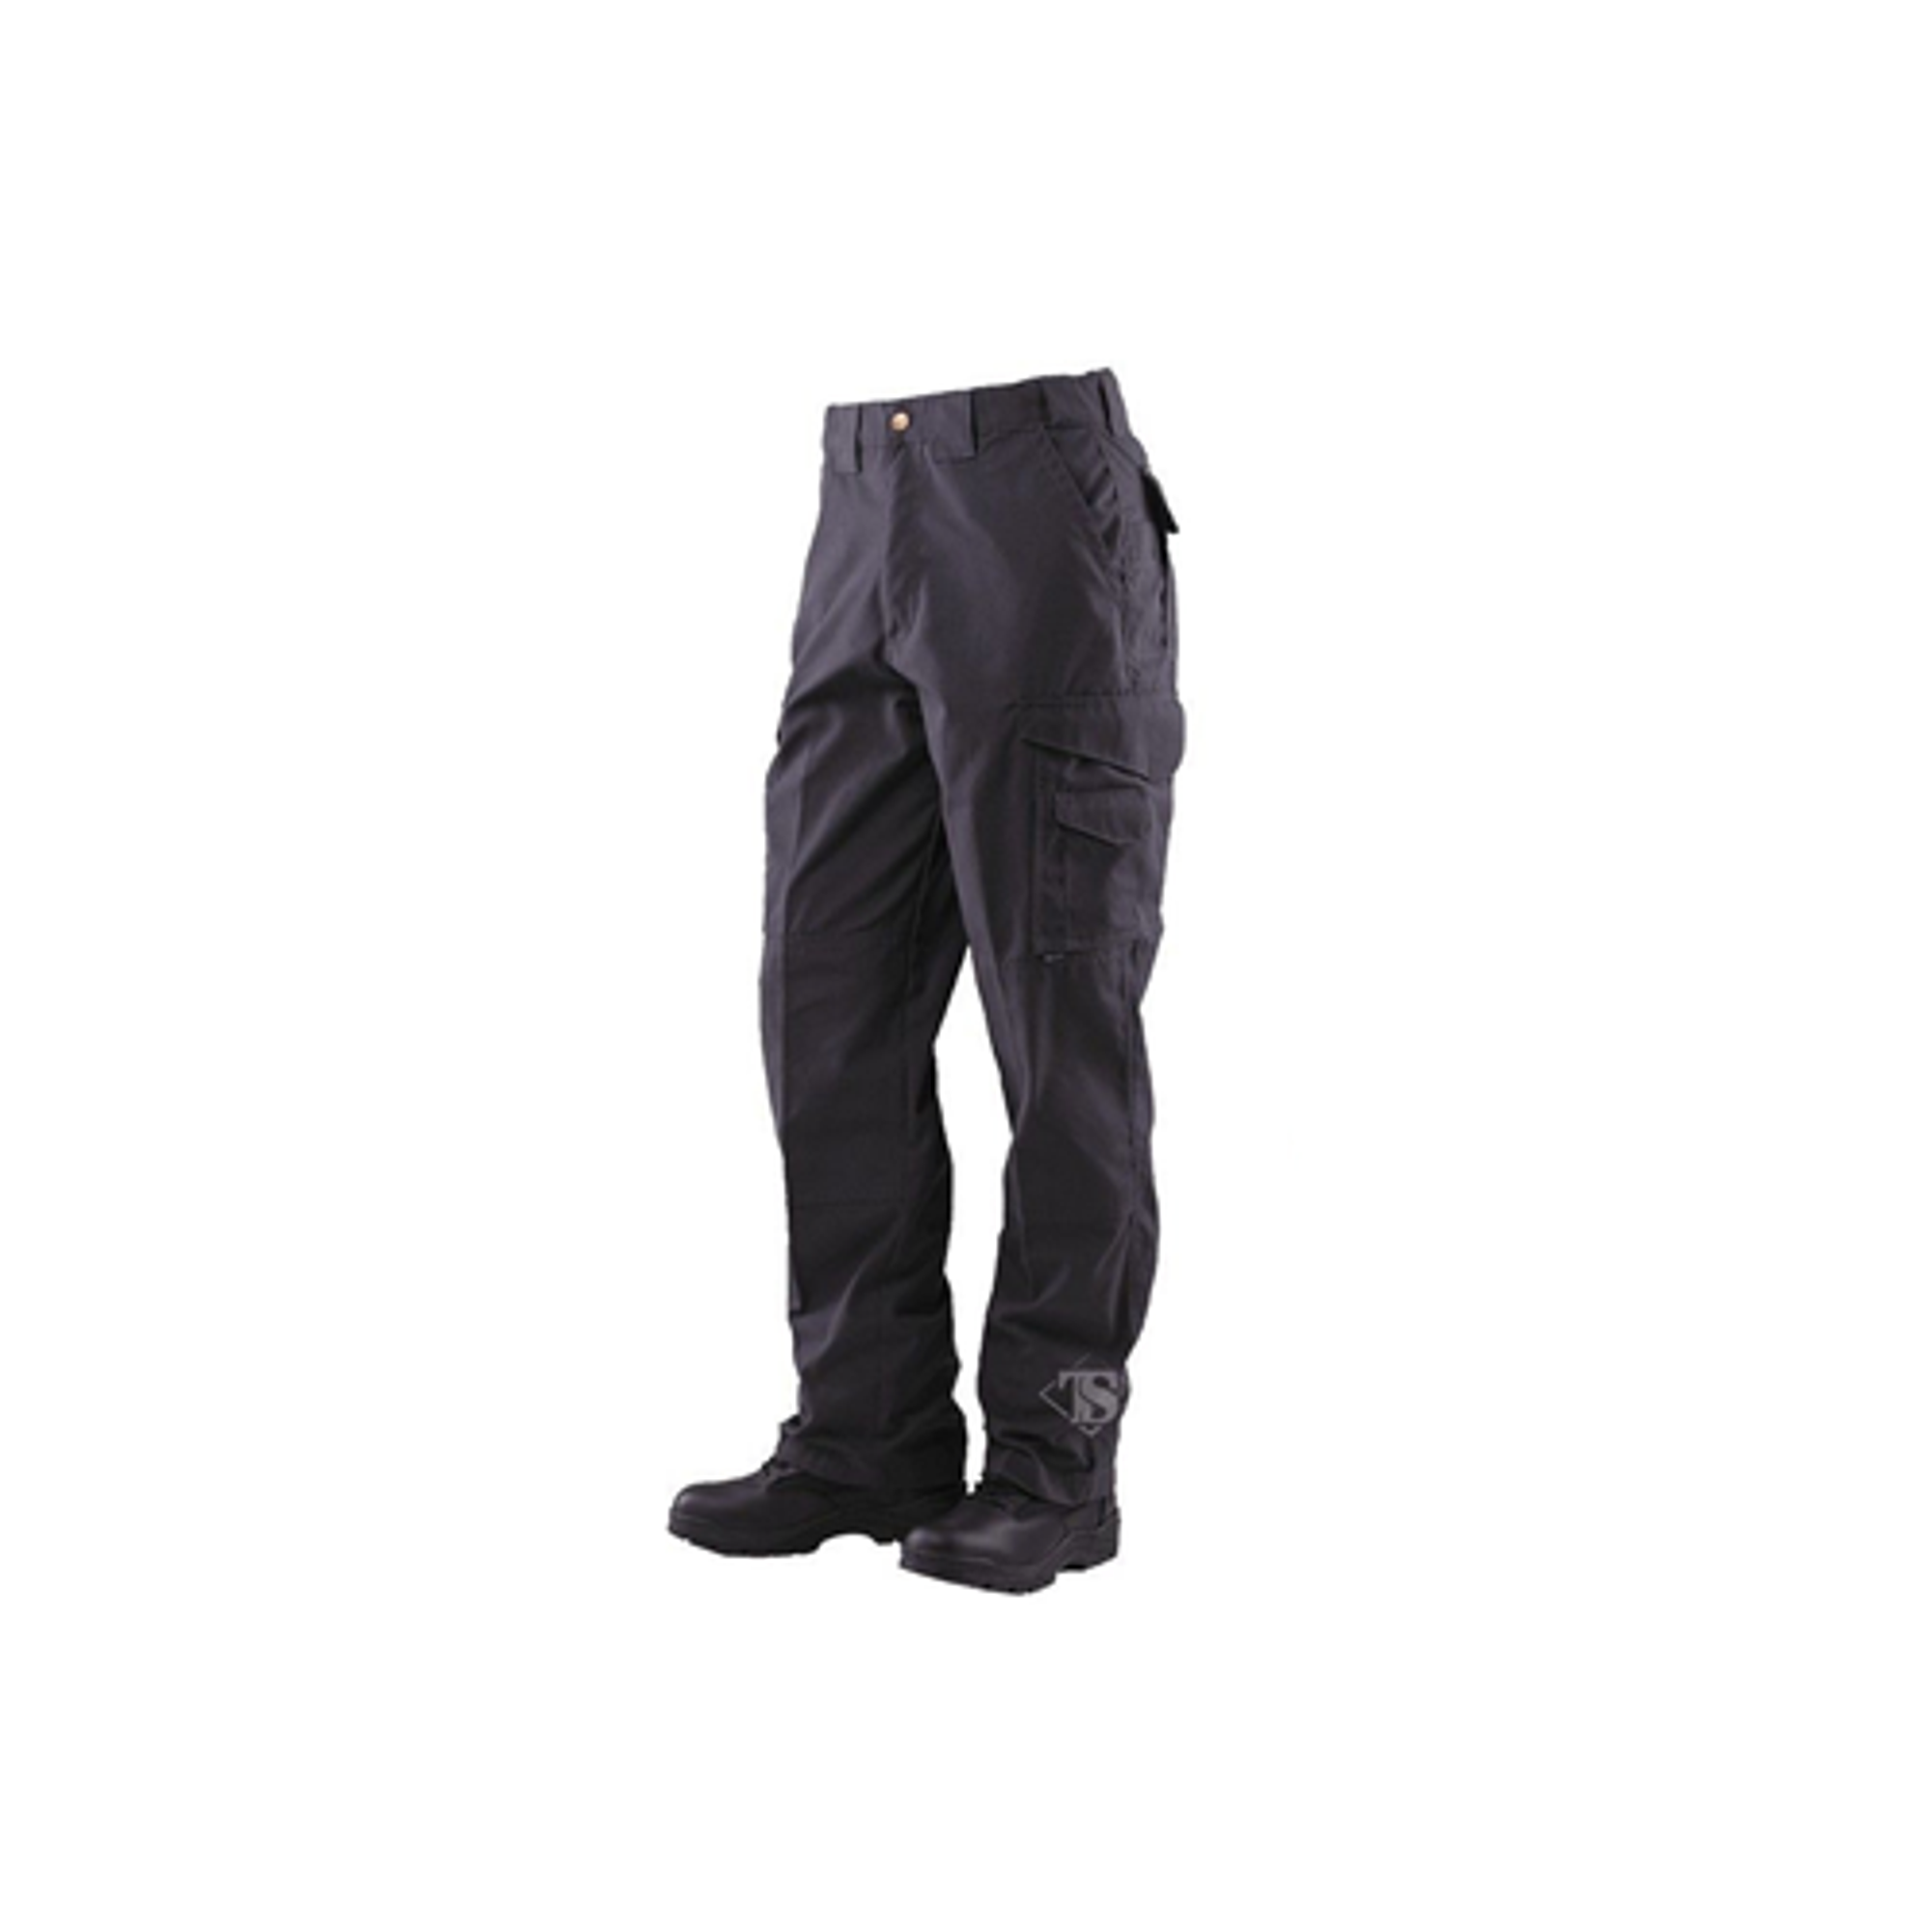 24-7 Original Tactical Pants - 6.5oz - Black - KRTSP-1062008